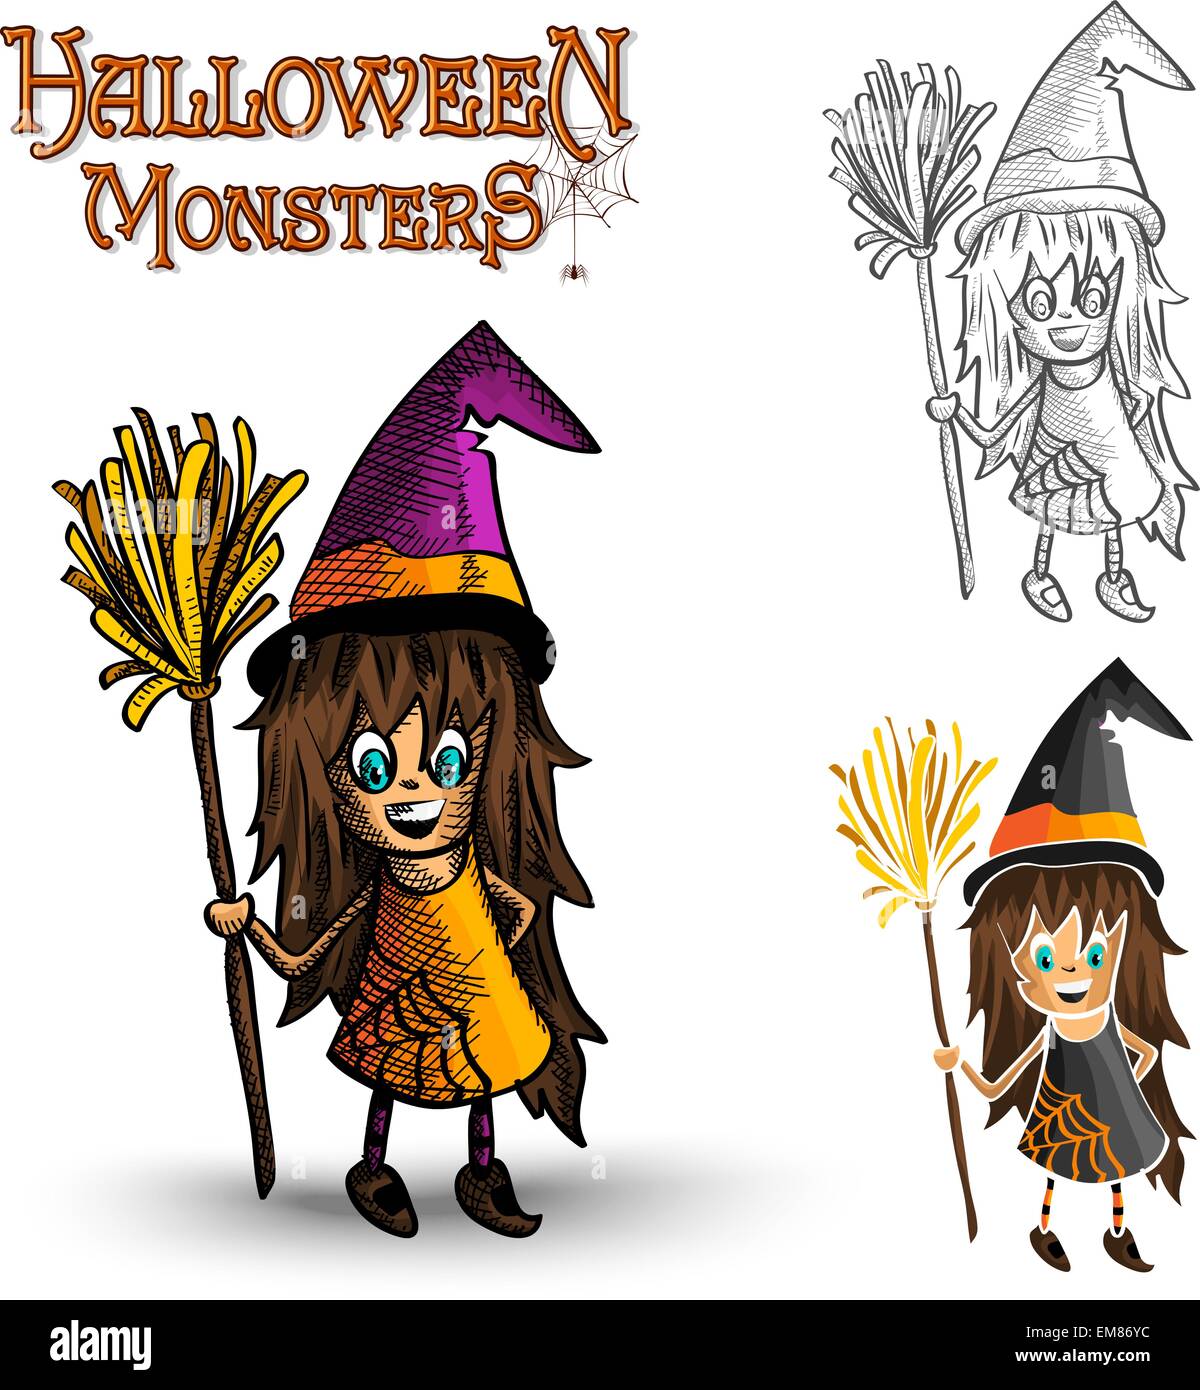 Halloween Monster gruselige Hexe Abbildung EPS10 Datei Stock Vektor